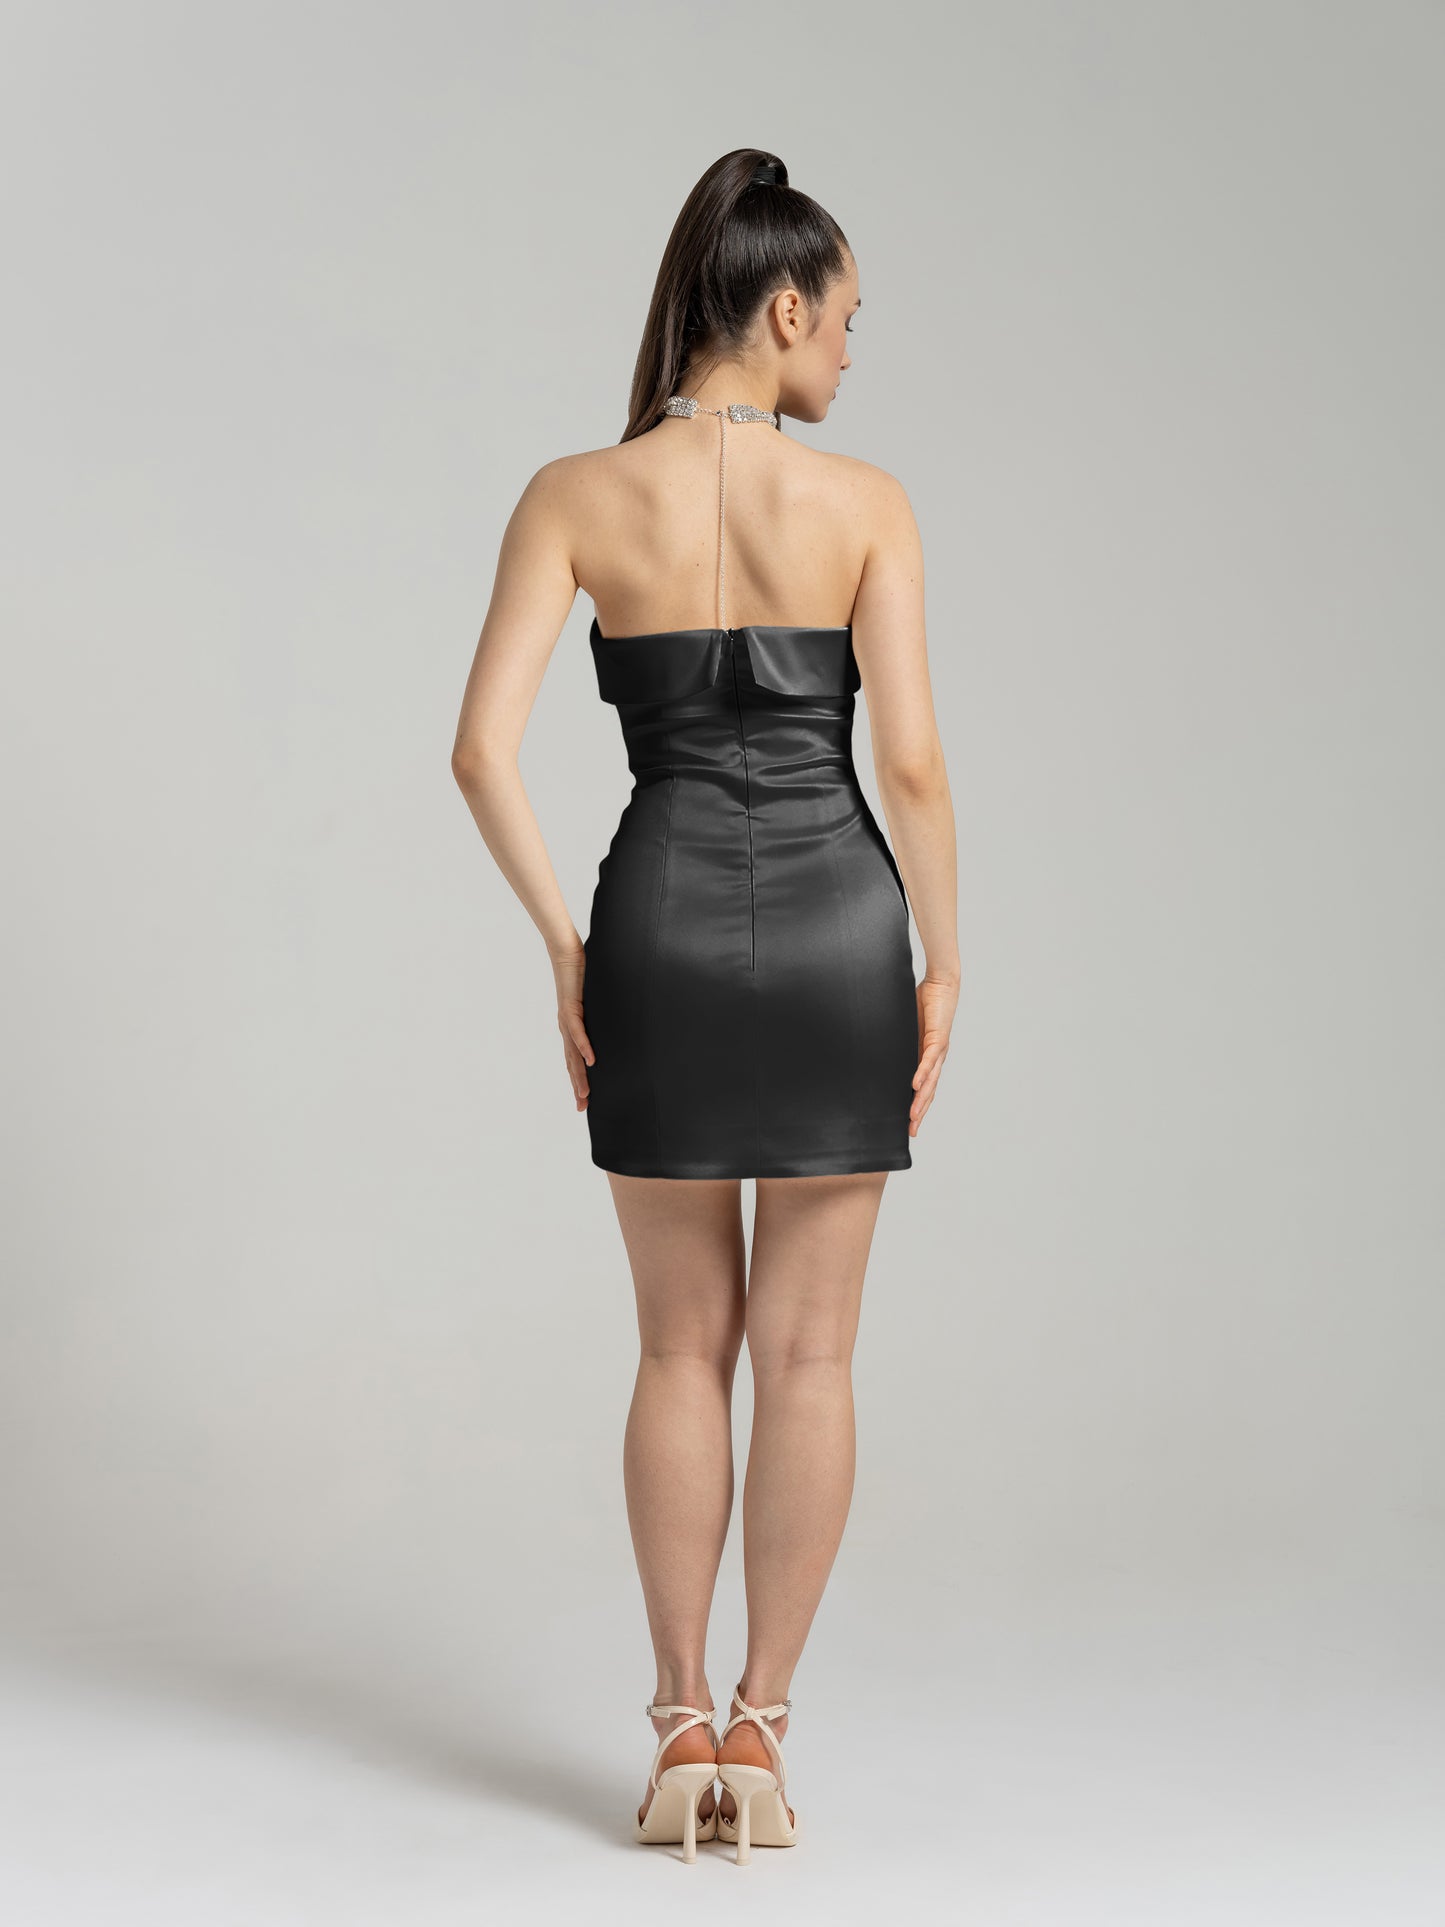 Romantic Allure Satin Mini Dress - Black by Tia Dorraine Women's Luxury Fashion Designer Clothing Brand